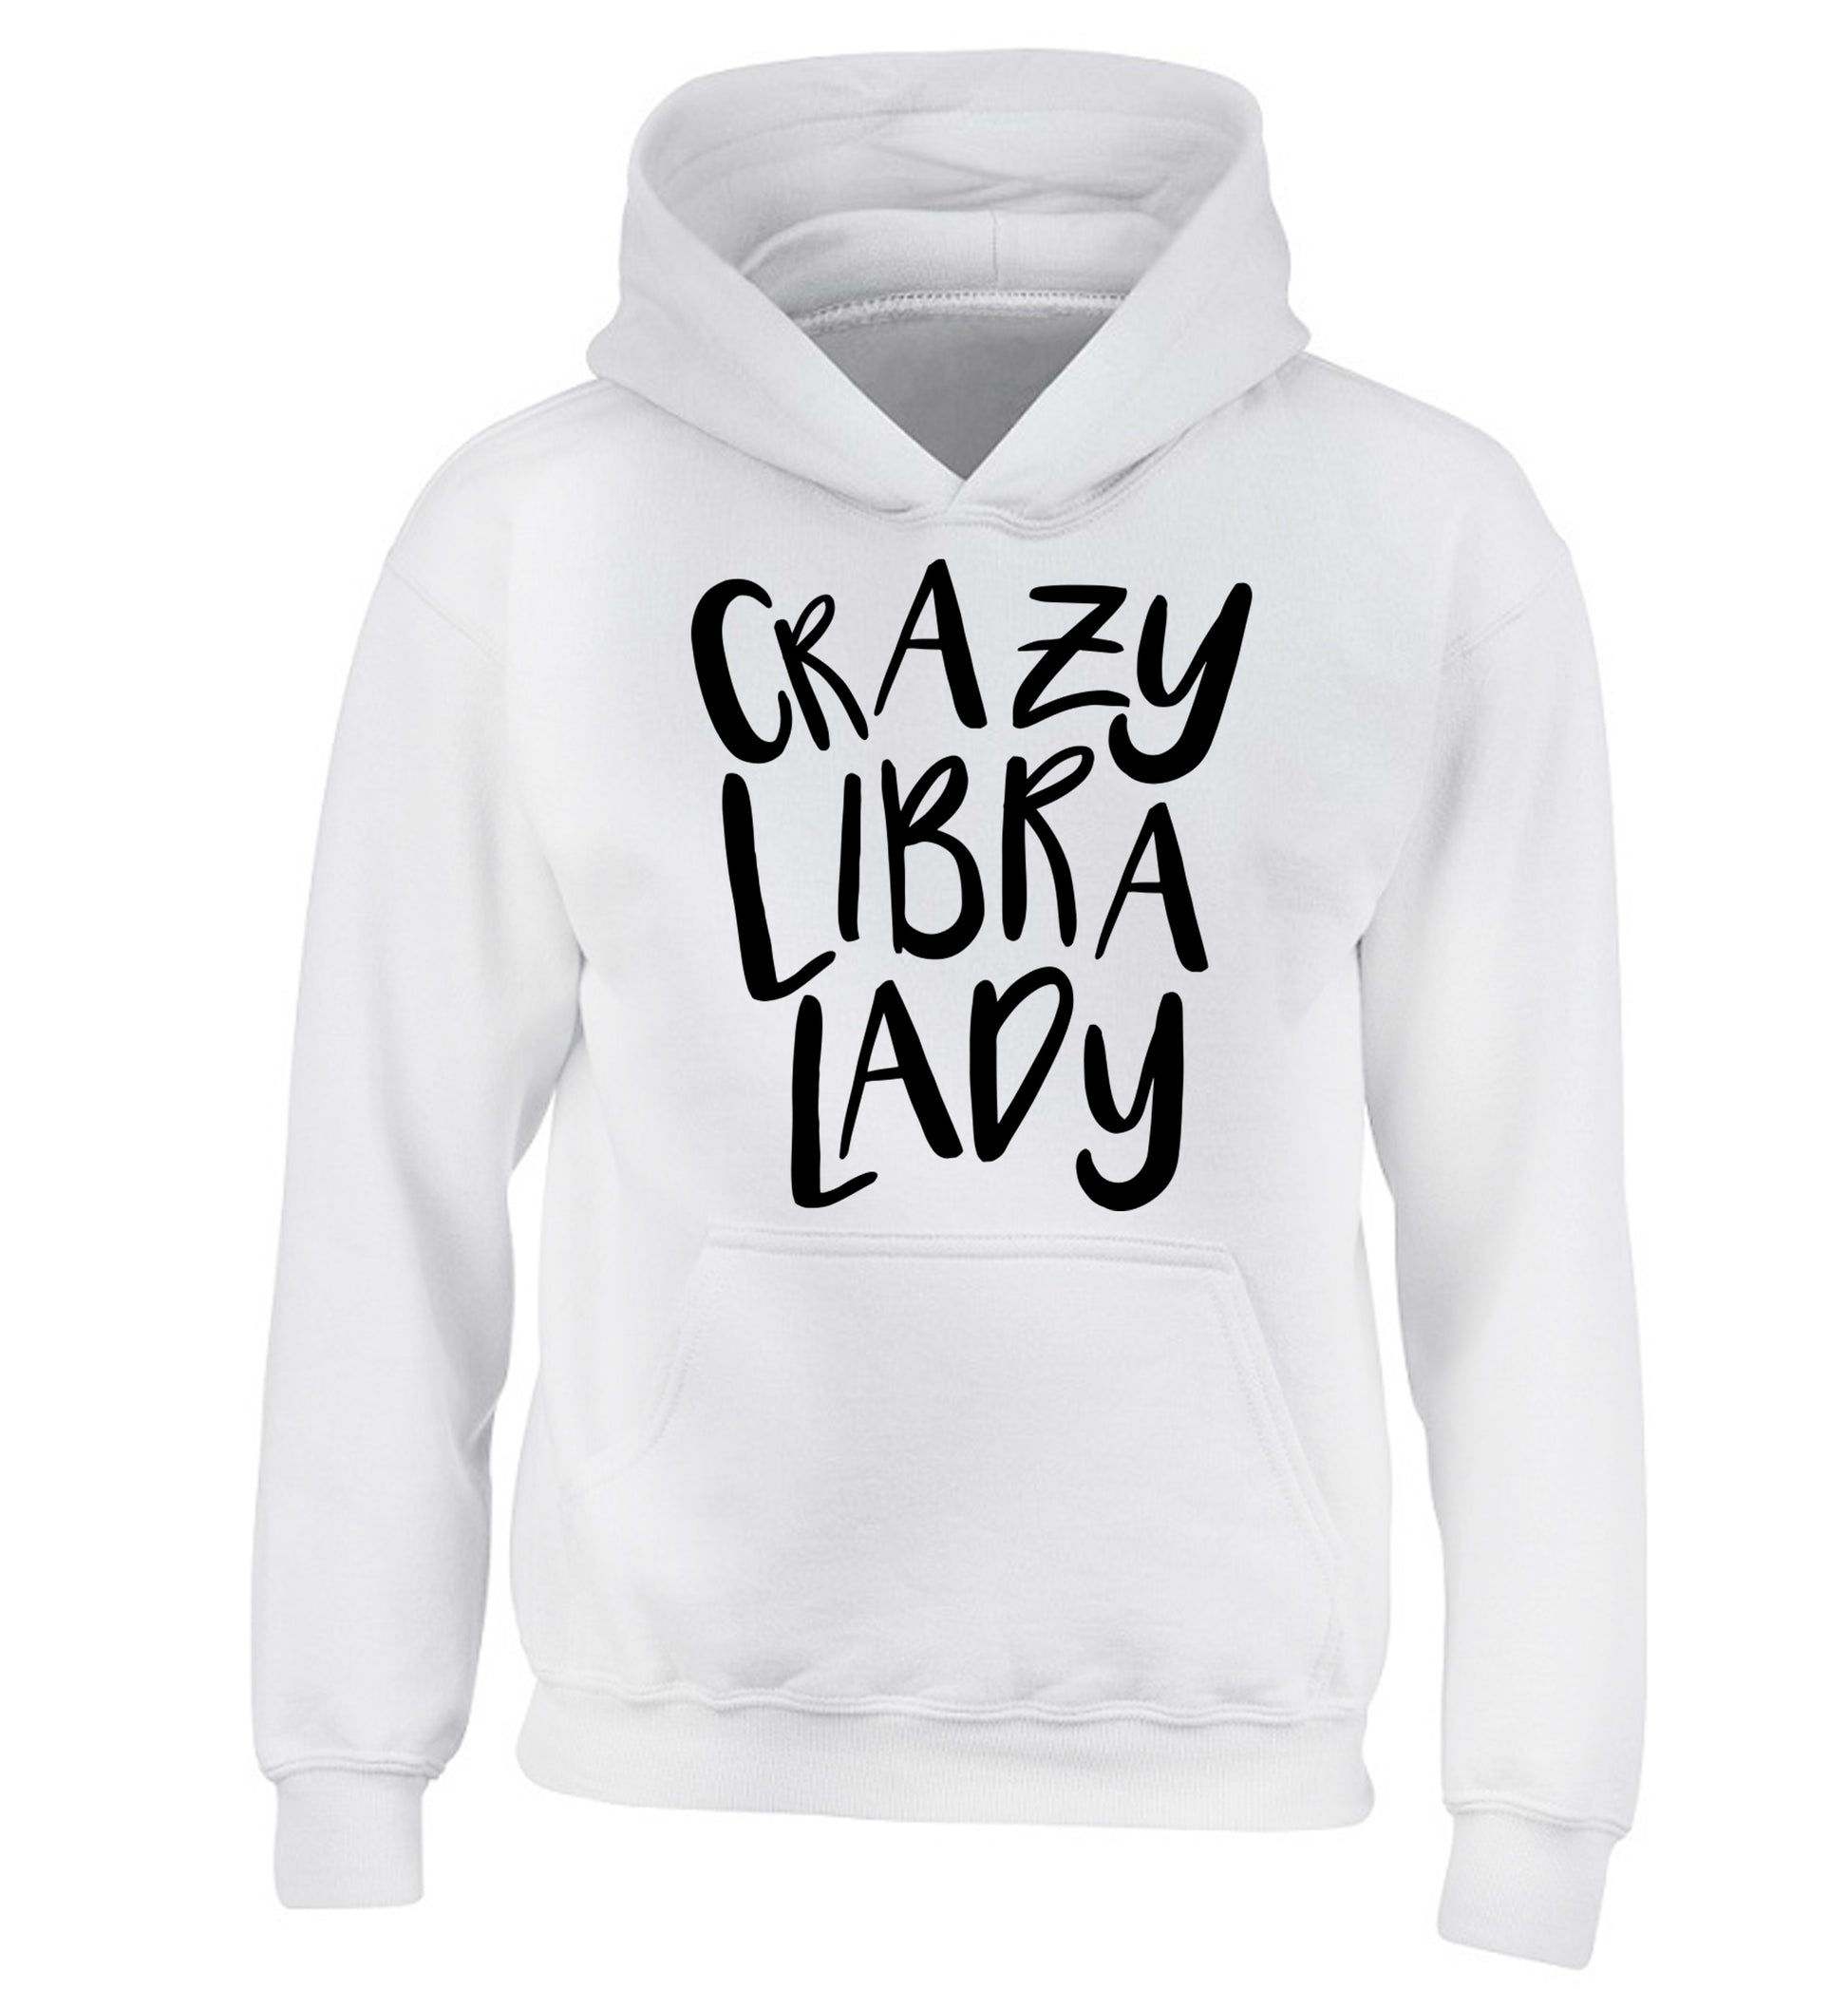 Crazy libra lady children's white hoodie 12-13 Years